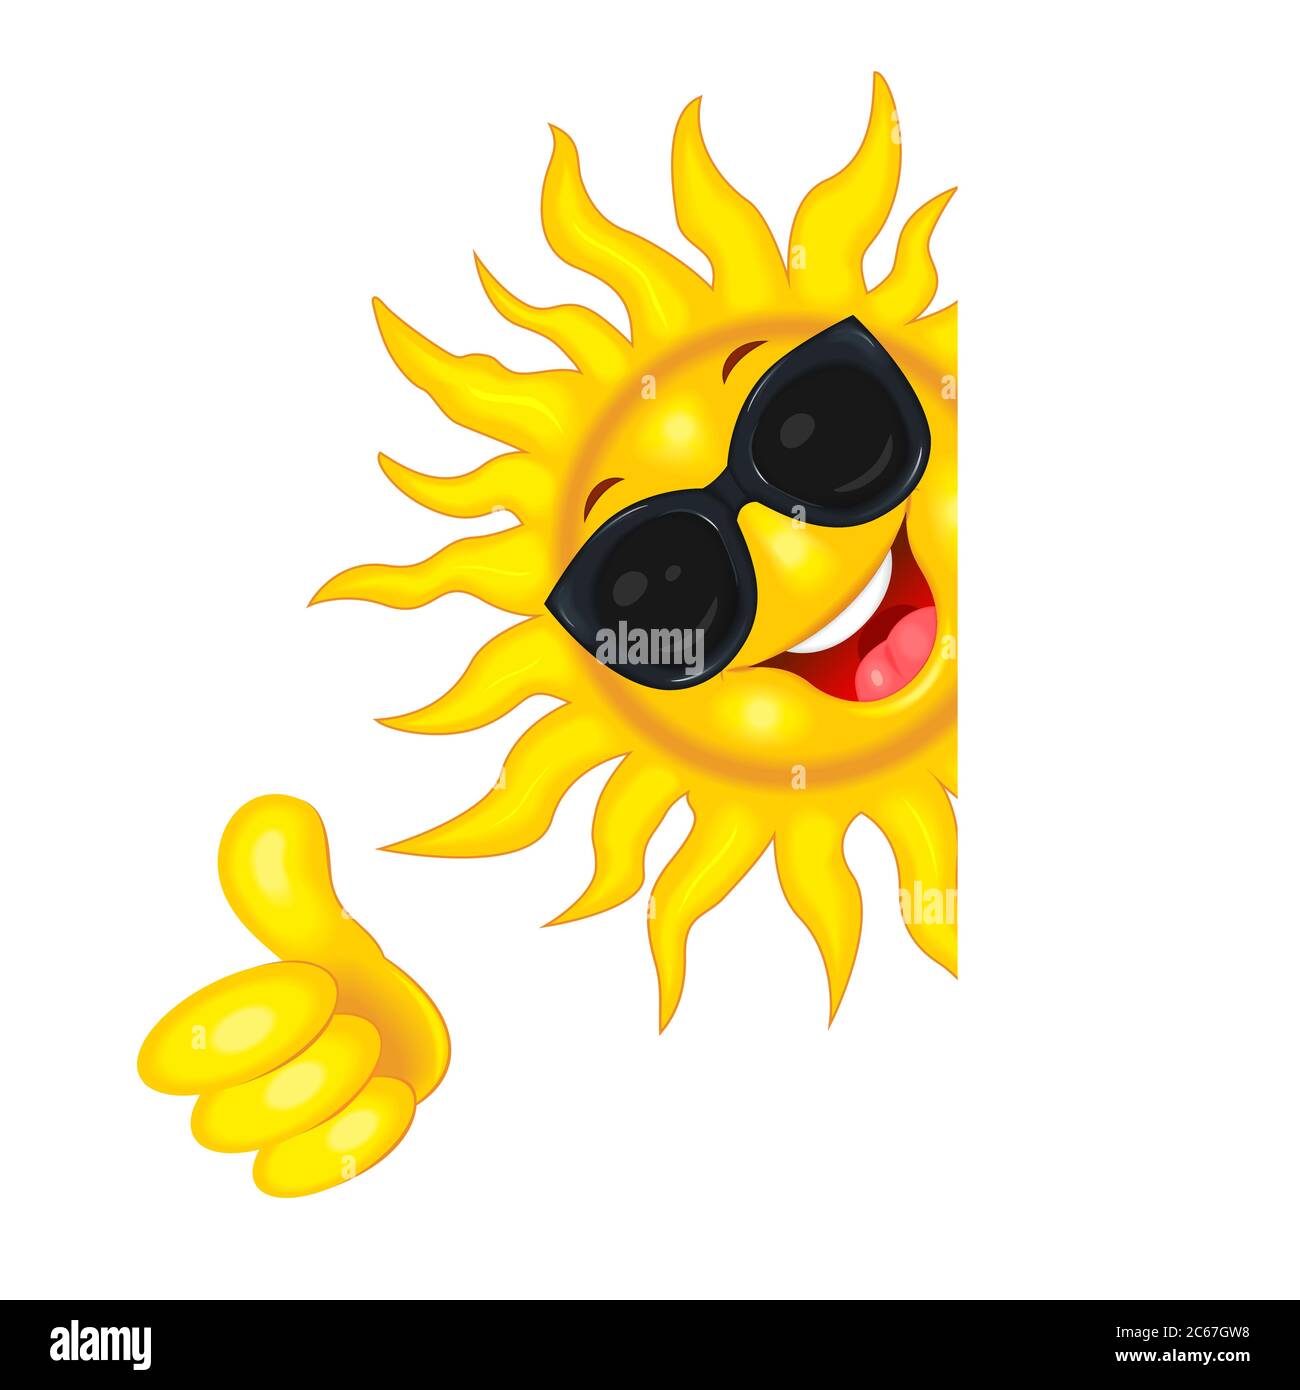 Cheerful cartoon sun in sun glasses. Sun on a white background. The sun rejoices in good luck. Stock Vector